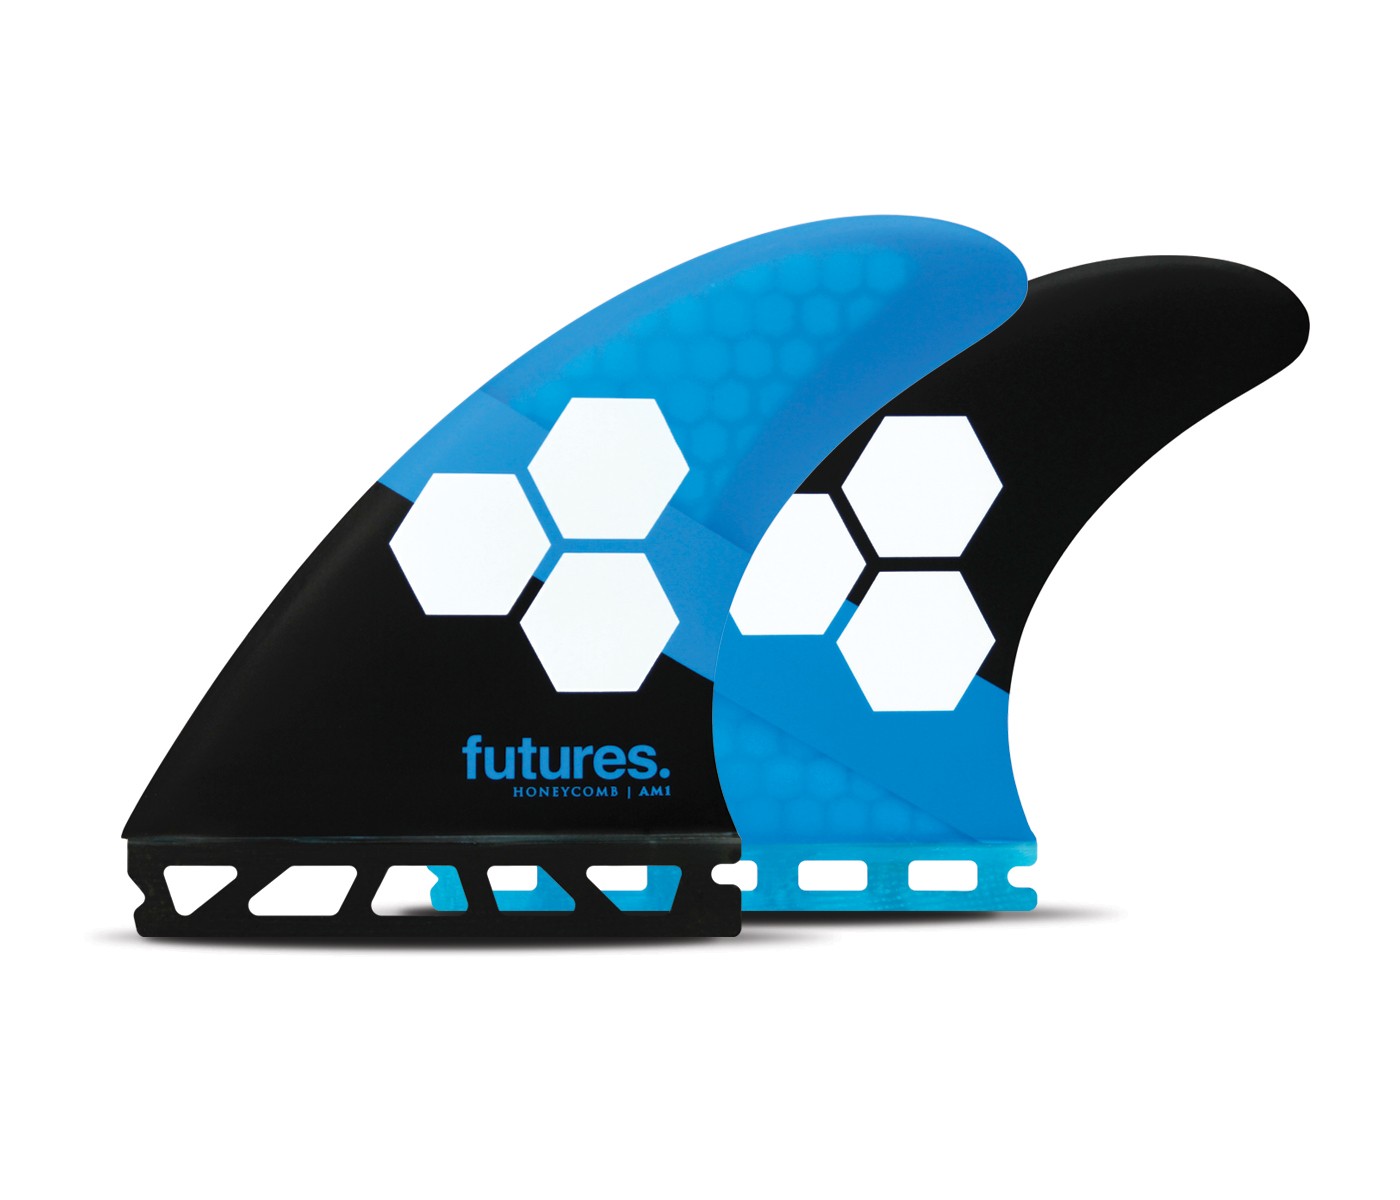 futures honeycomb am1 surfboard fins